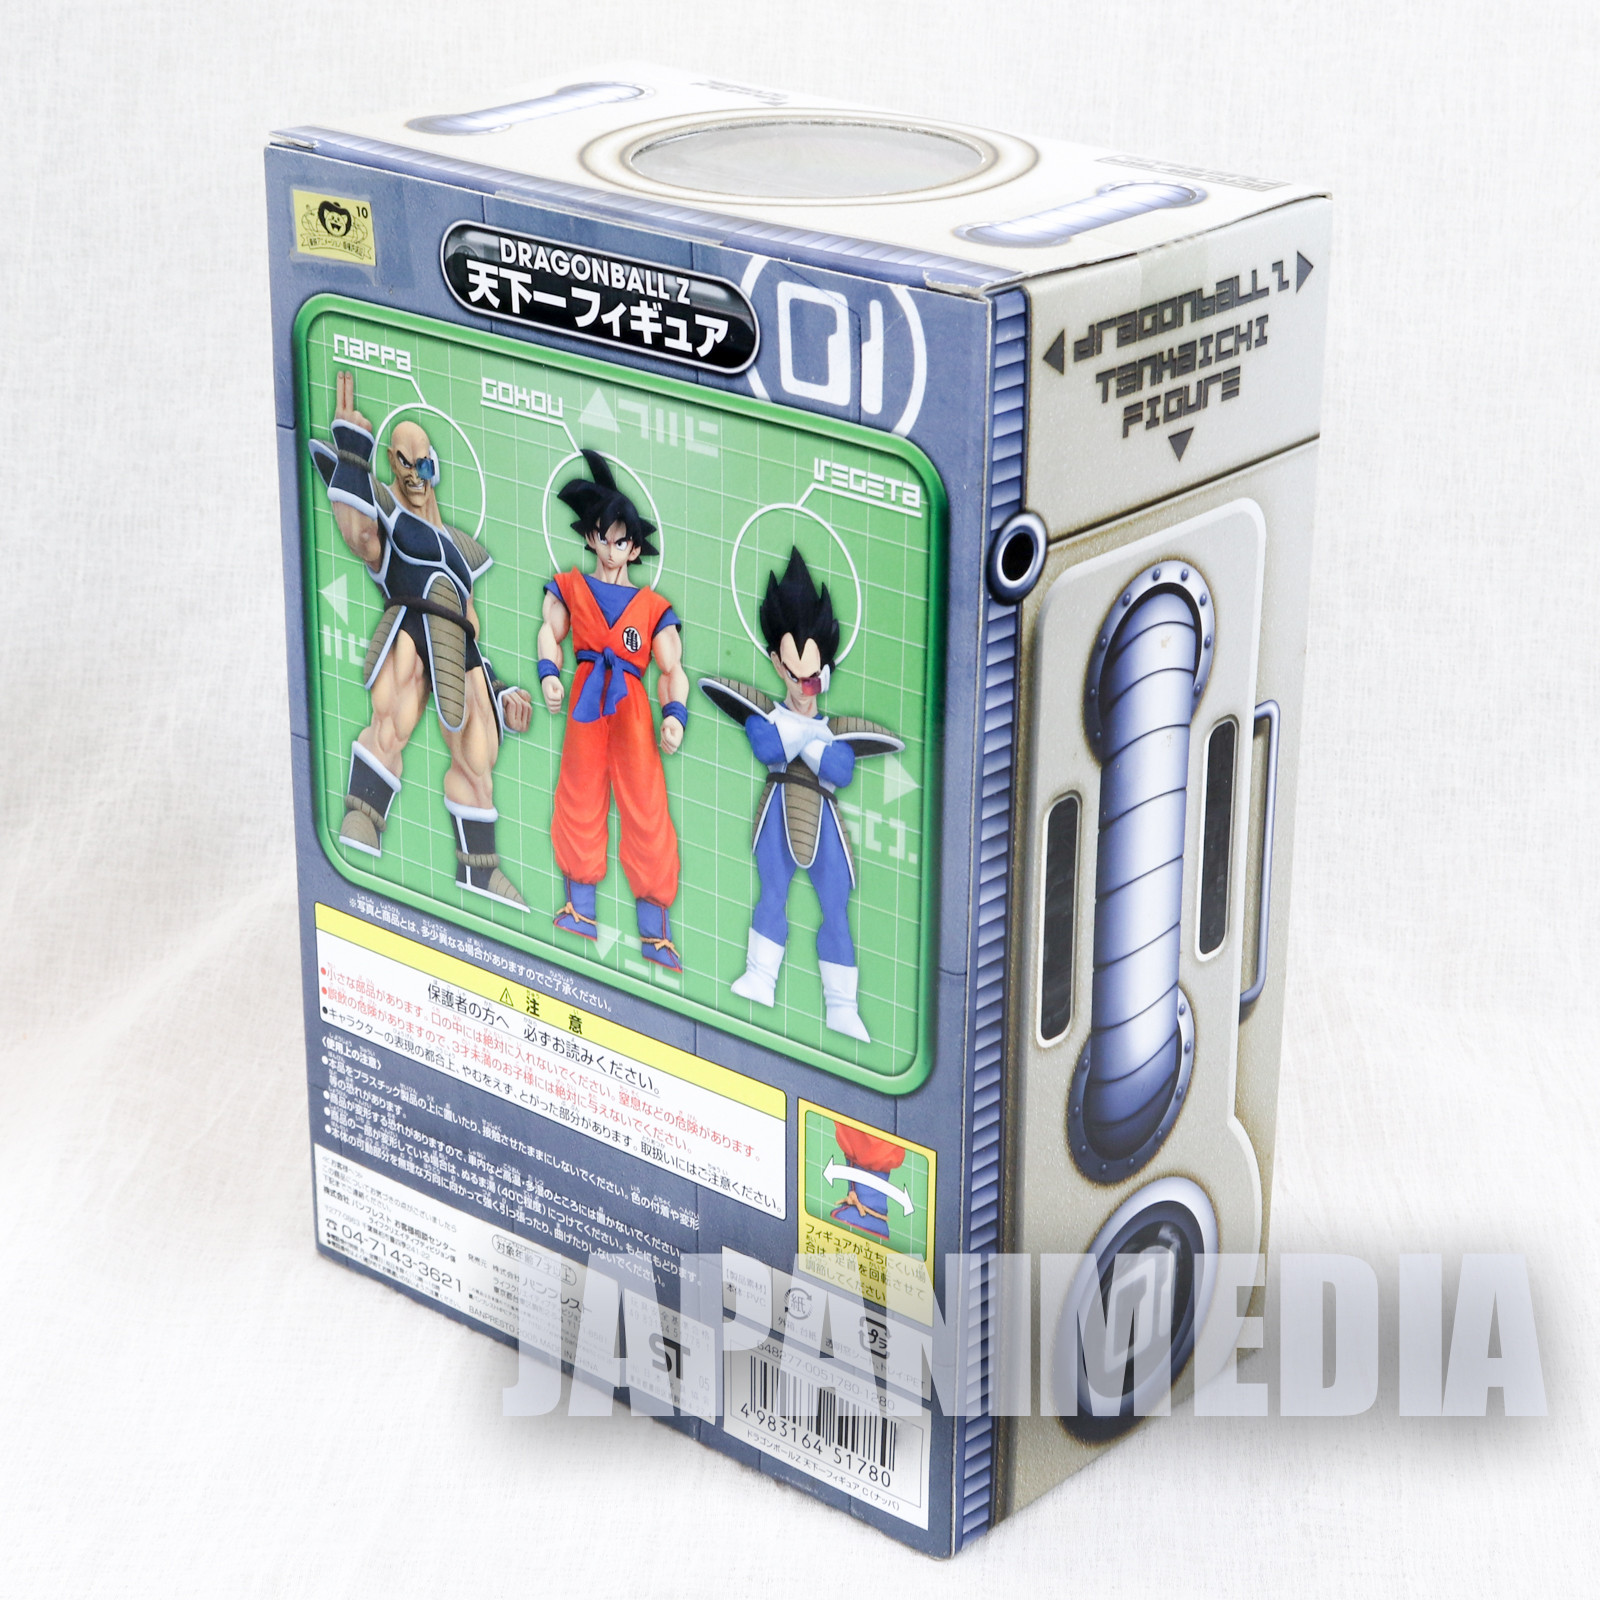 Japan Banpresto Unifive Dragon Ball Z Goku Action Figure Toy Kid